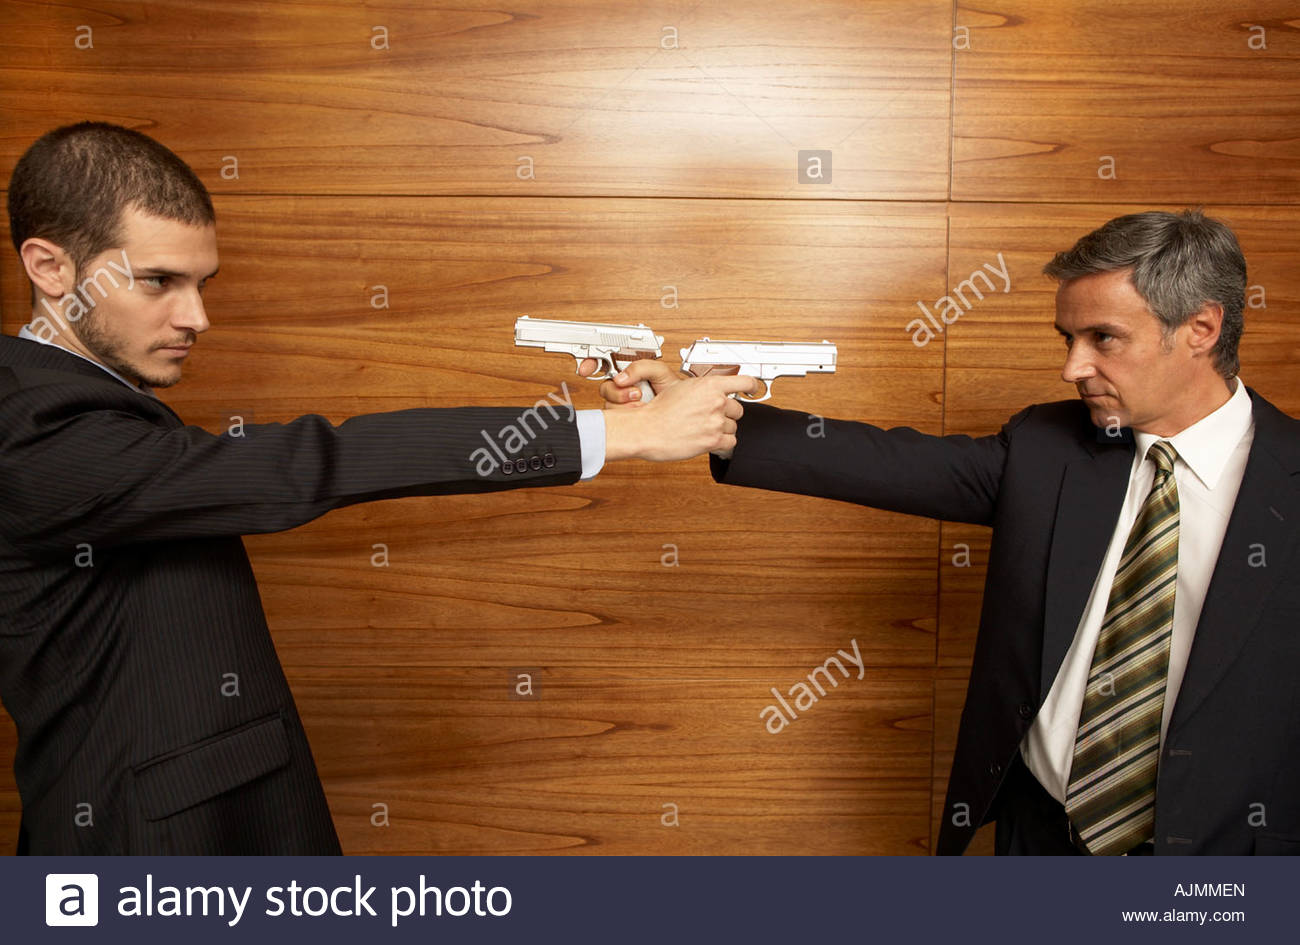 two-businessmen-pointing-guns-at-each-other-AJMMEN.jpg